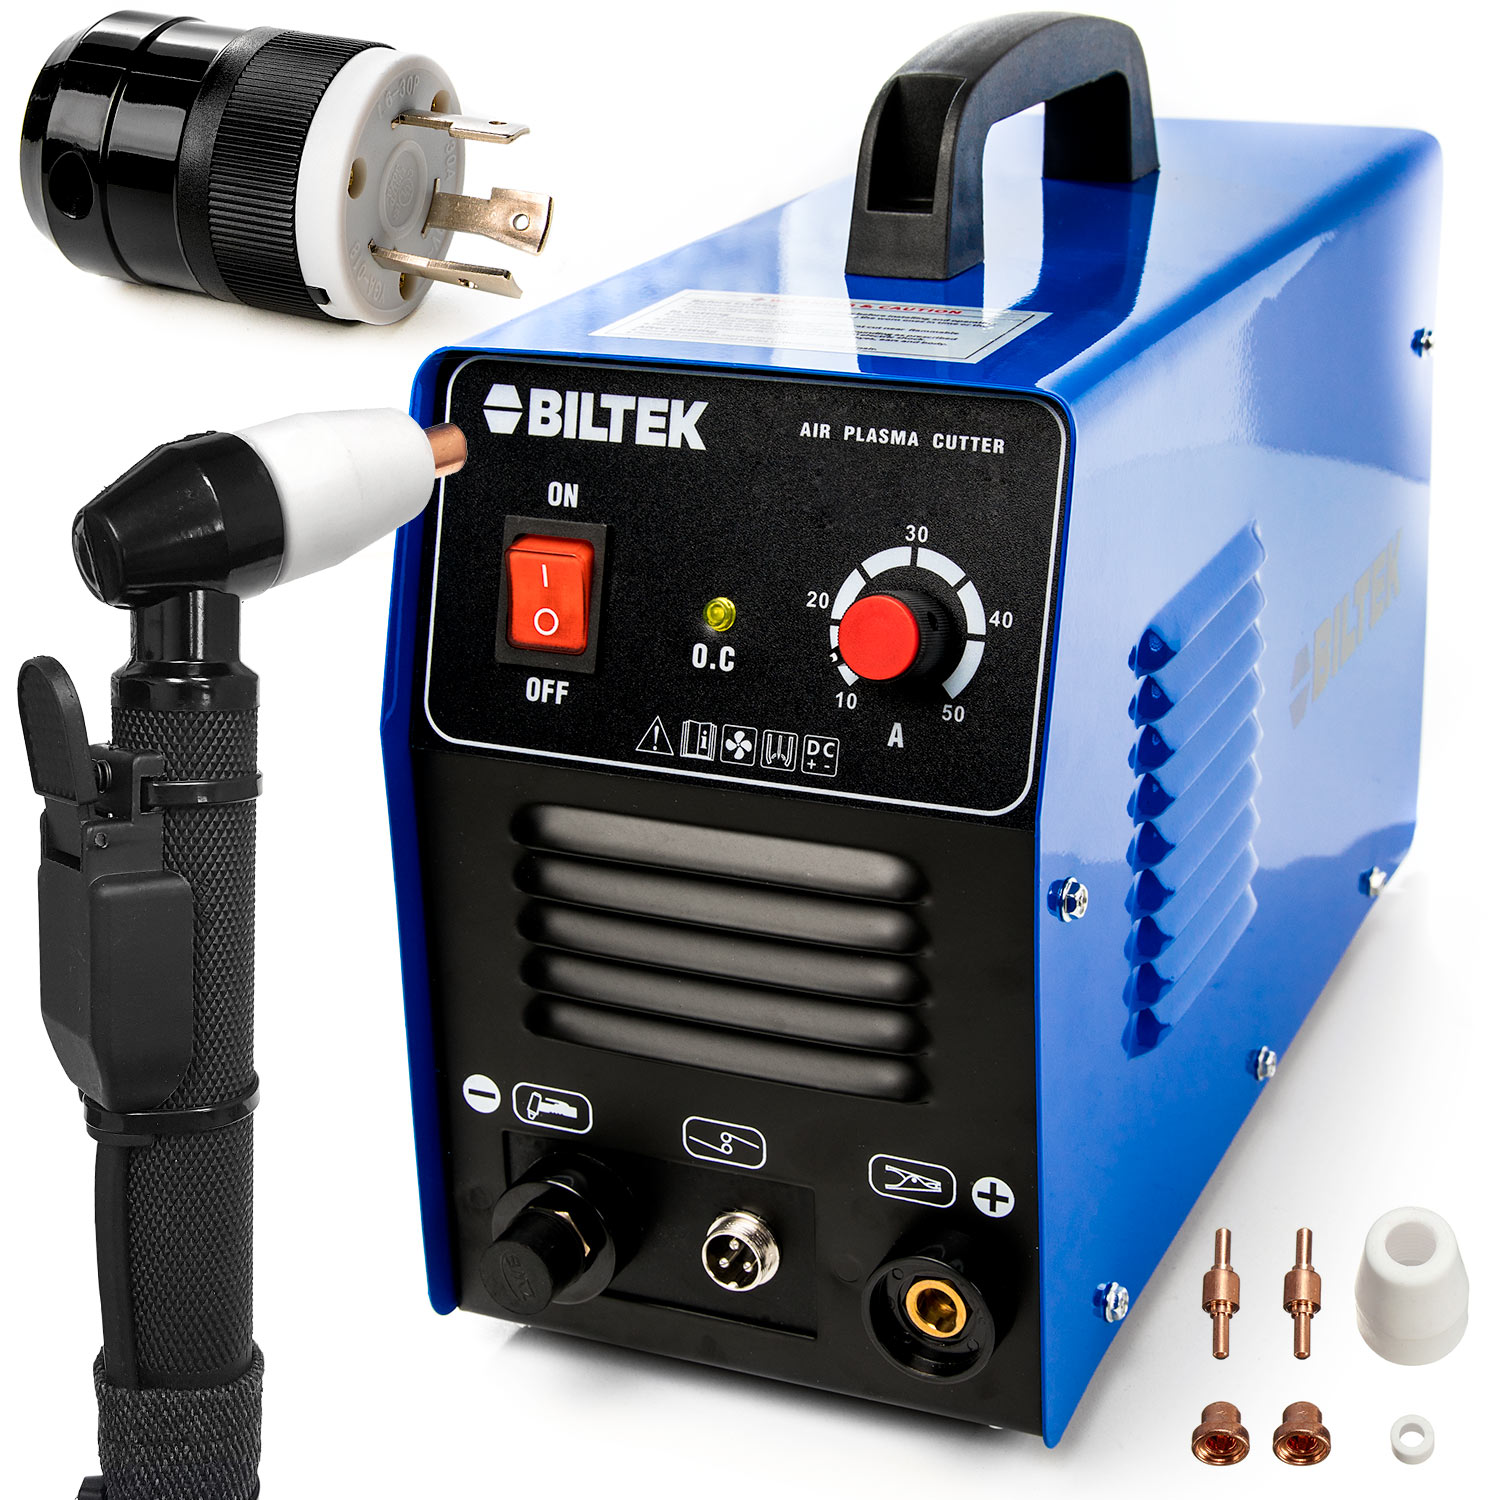 Biltek 50Amp Non-Pilot Arc Plasma Cutter, Dual Voltage 110V/220V with Pre-Attached 110V US Plug + 220V L6-30P Plug, 1/2 Inch Cut, Blue